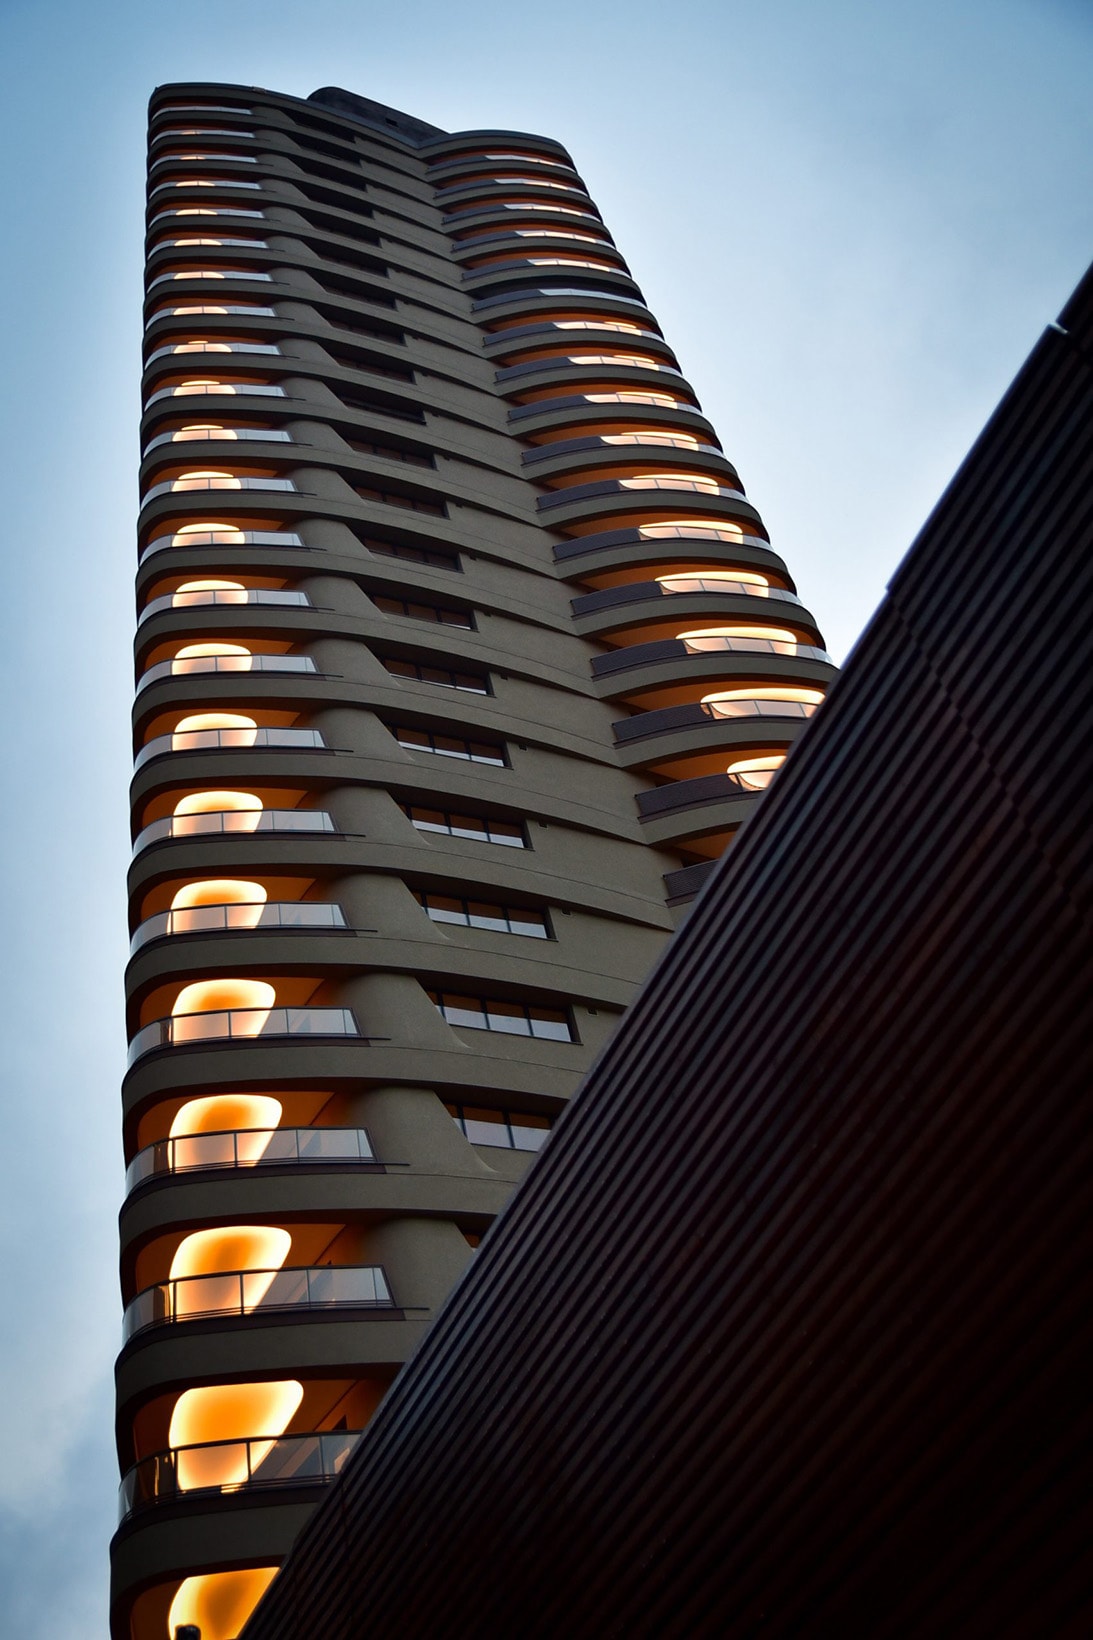 Pininfarina Sao Paulo Residential Tower studio apartments Cyrela brazil 2018 first luxury 92 23 story